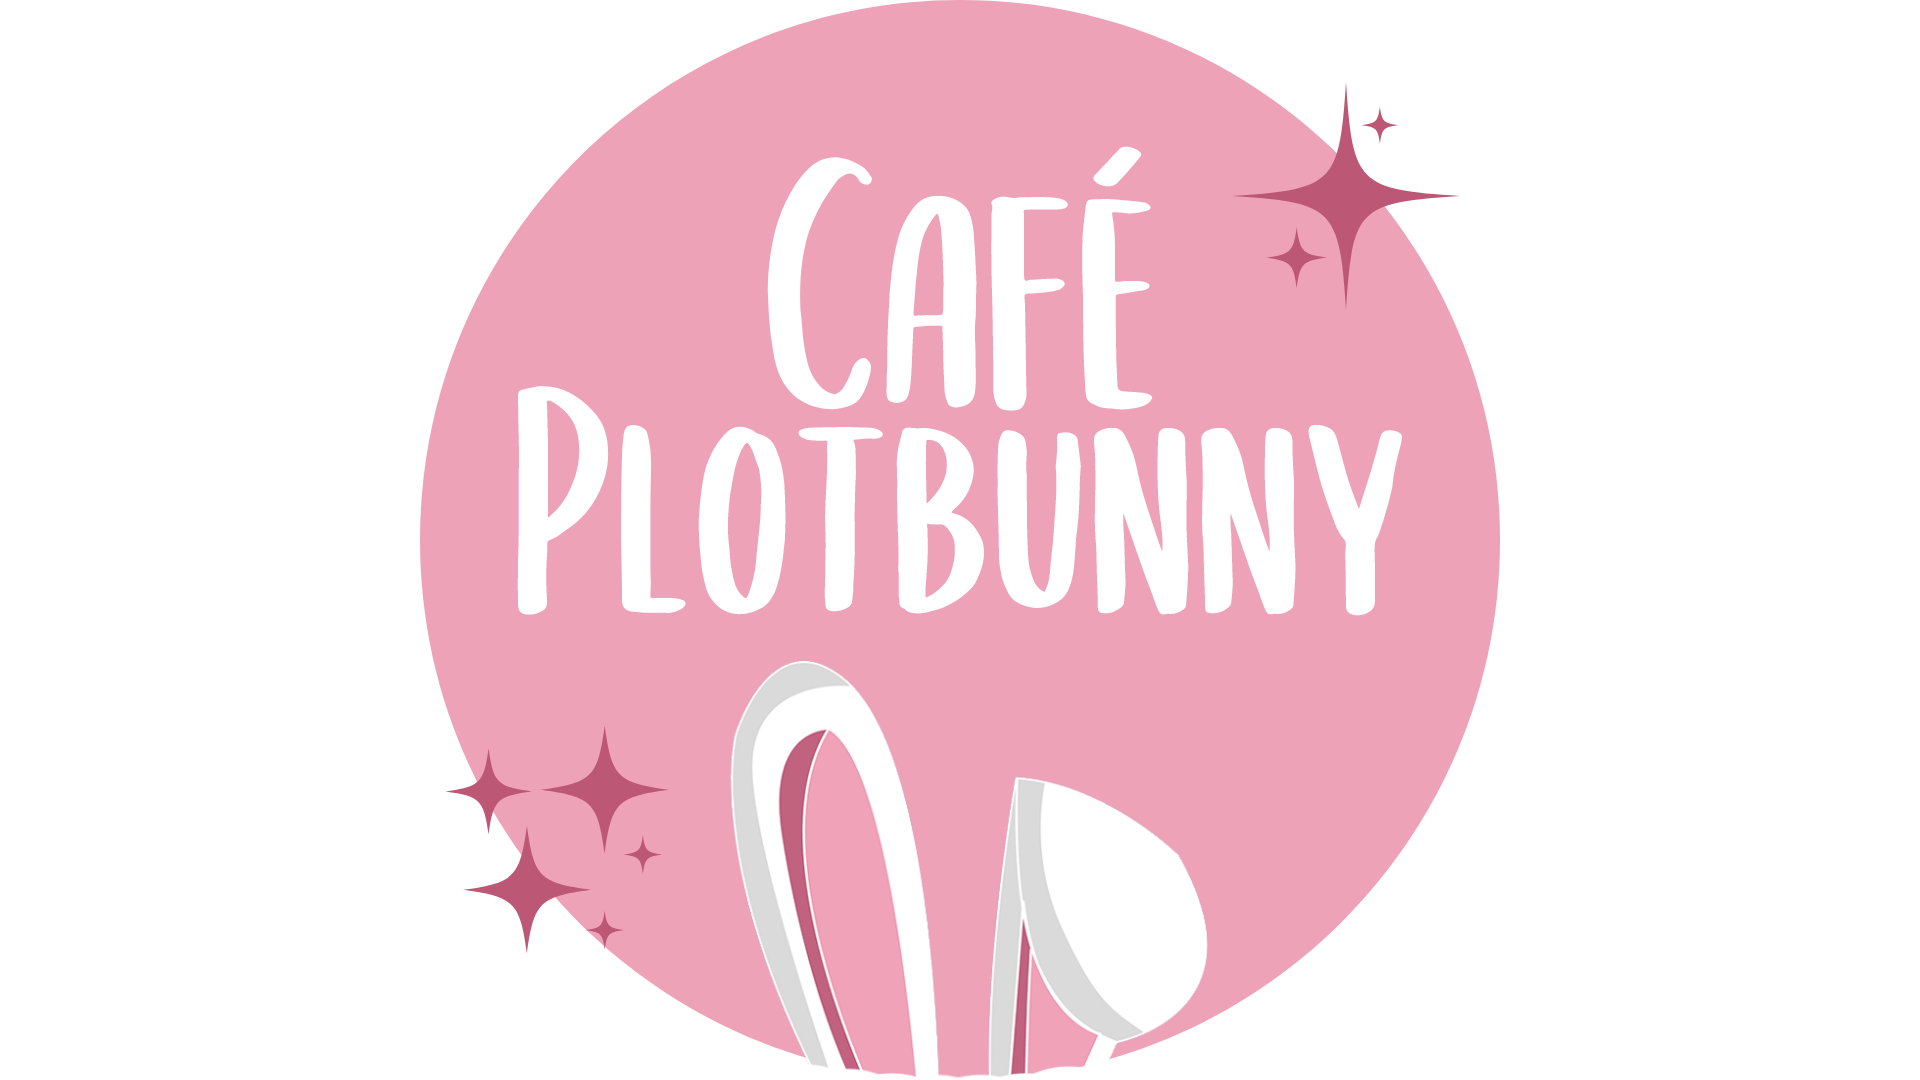 Café Plotbunny